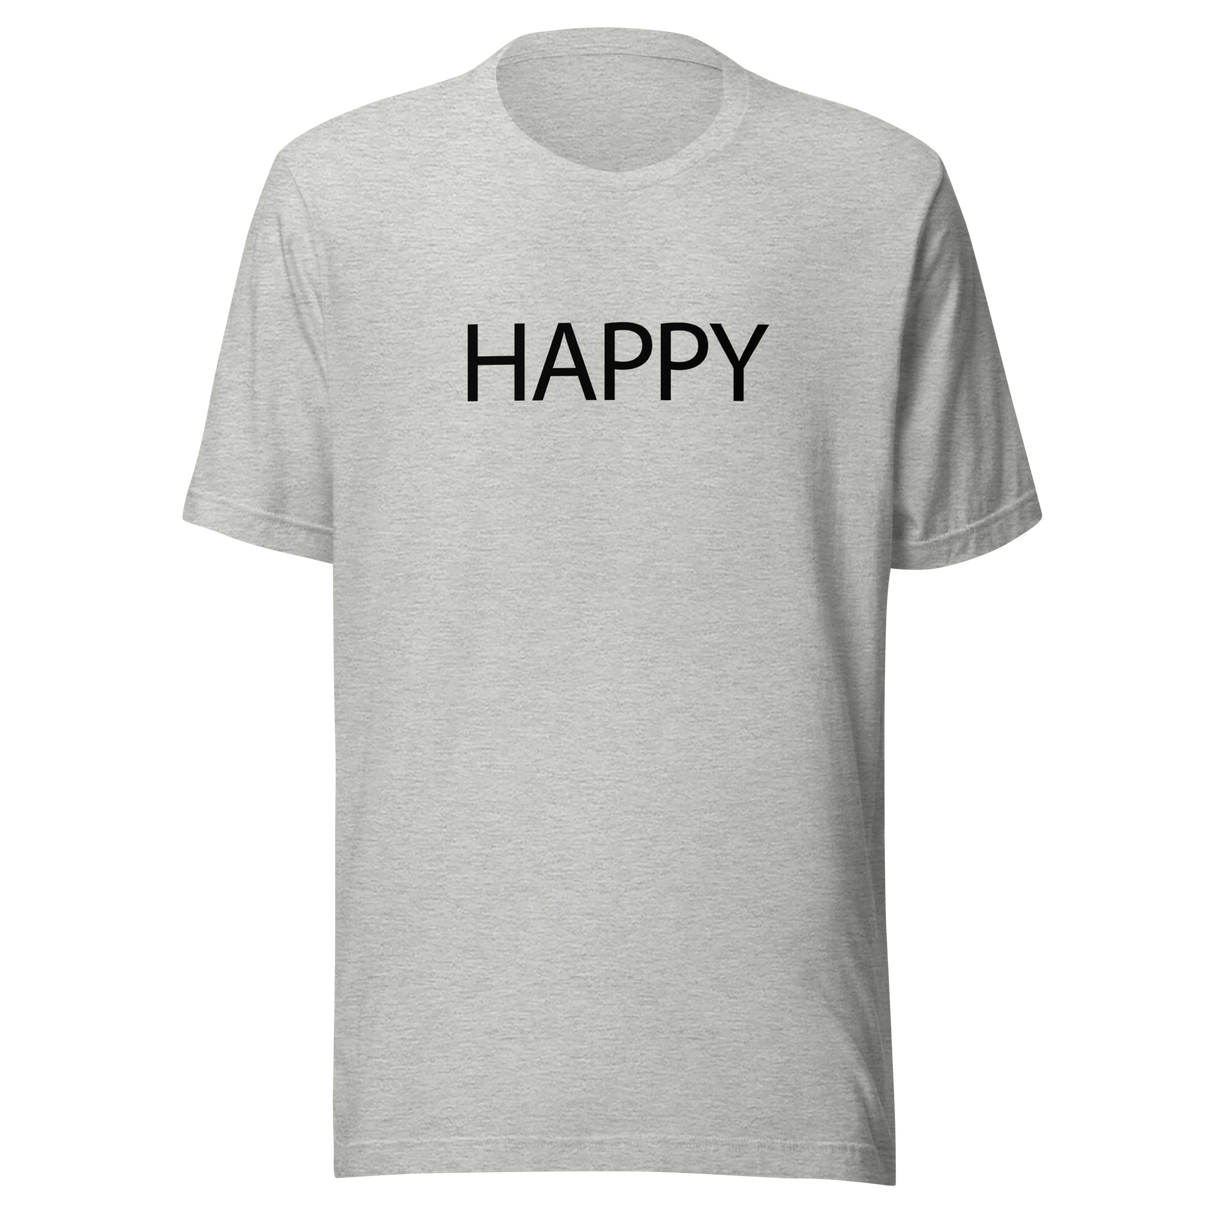 Happy - Happy Tee - Cute T-Shirt - Summer Tee - Inspirational T-Shirt - Motivational Tee